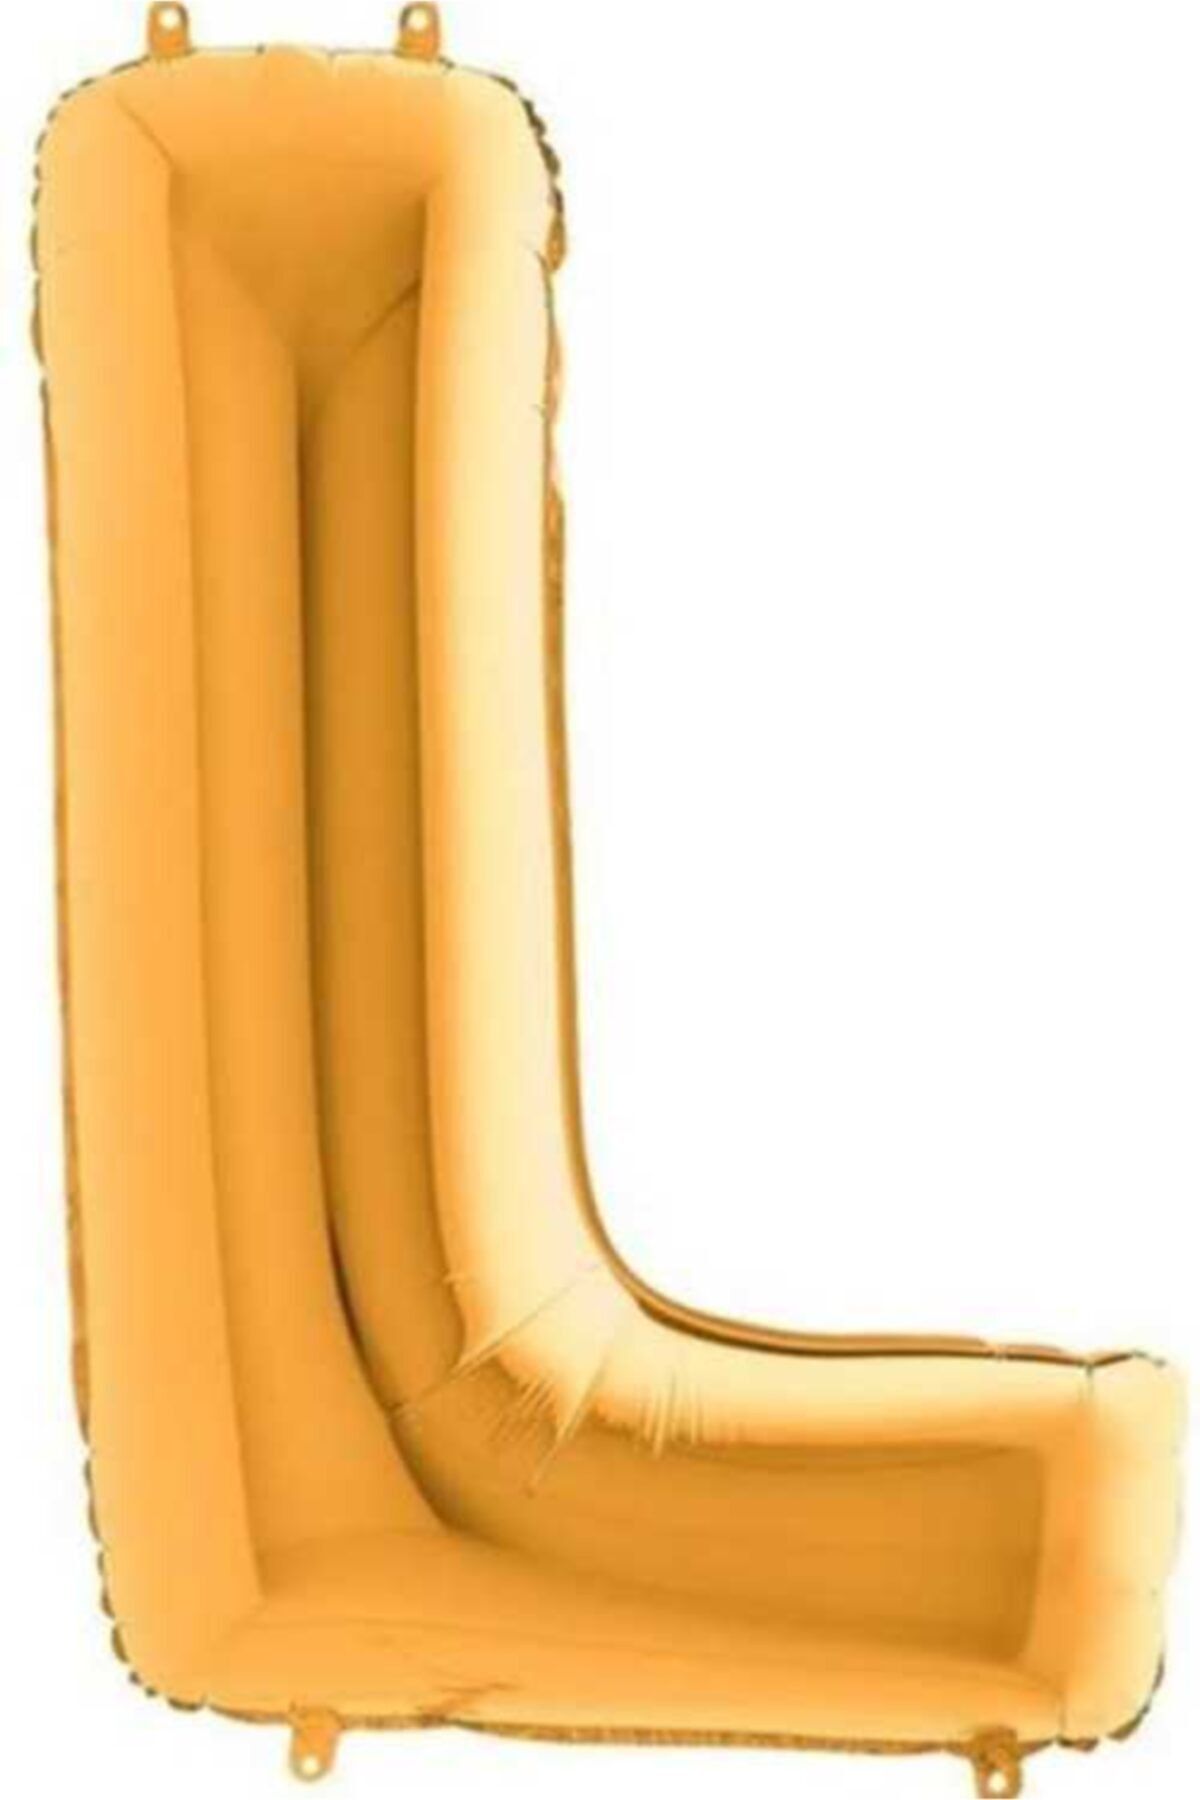 İkmal L Gold Harf Balon 76 Cm